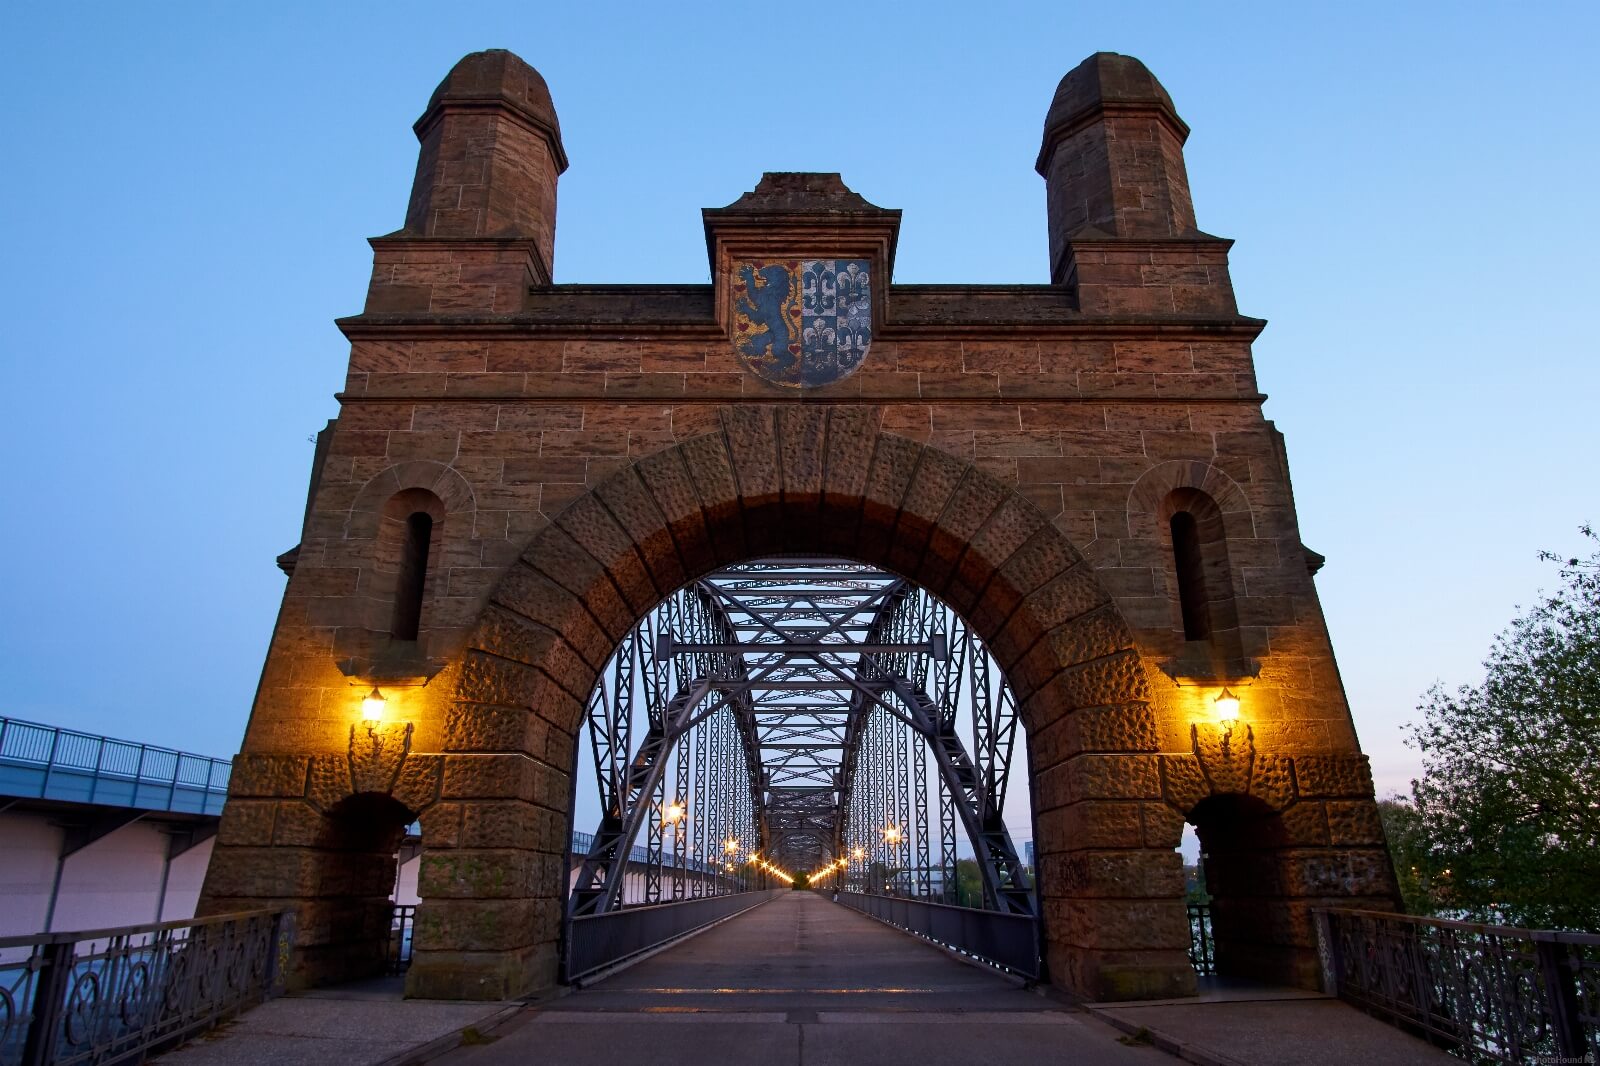 Image of Alte Hamburger Elbrücke (Old Elbe Bridge) by Robert Bro